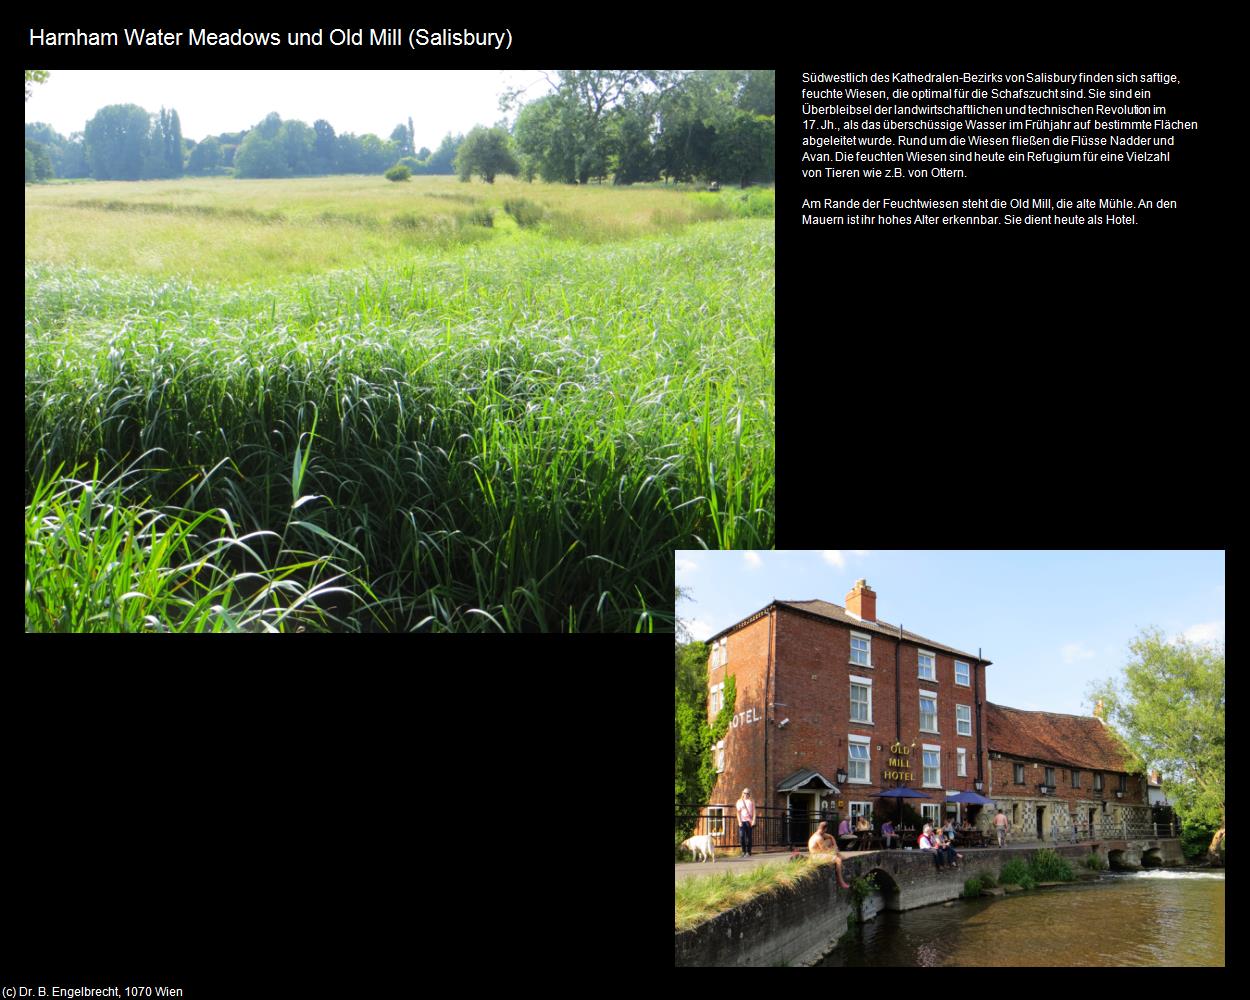 Harnham Water Meadows und Old Mill  (Salisbury, England) in Kulturatlas-ENGLAND und WALES